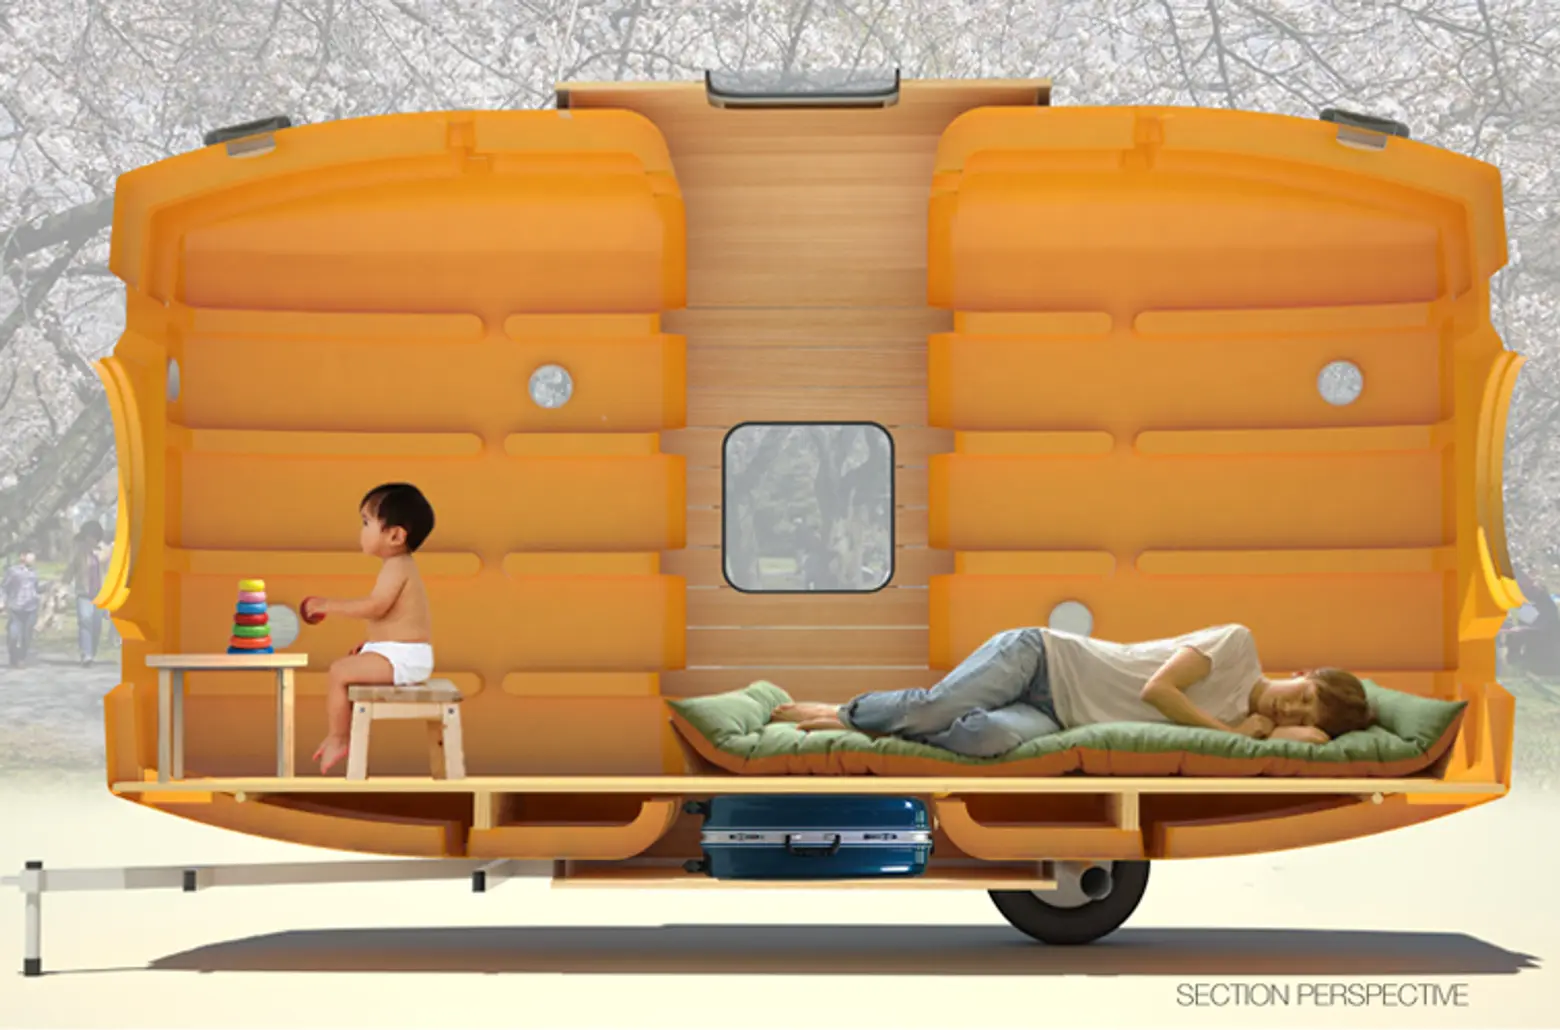 Stereotank, Taku Tanku, Takahiro Fukuda, pre-fab shelters, eco-friendly design, water tank design